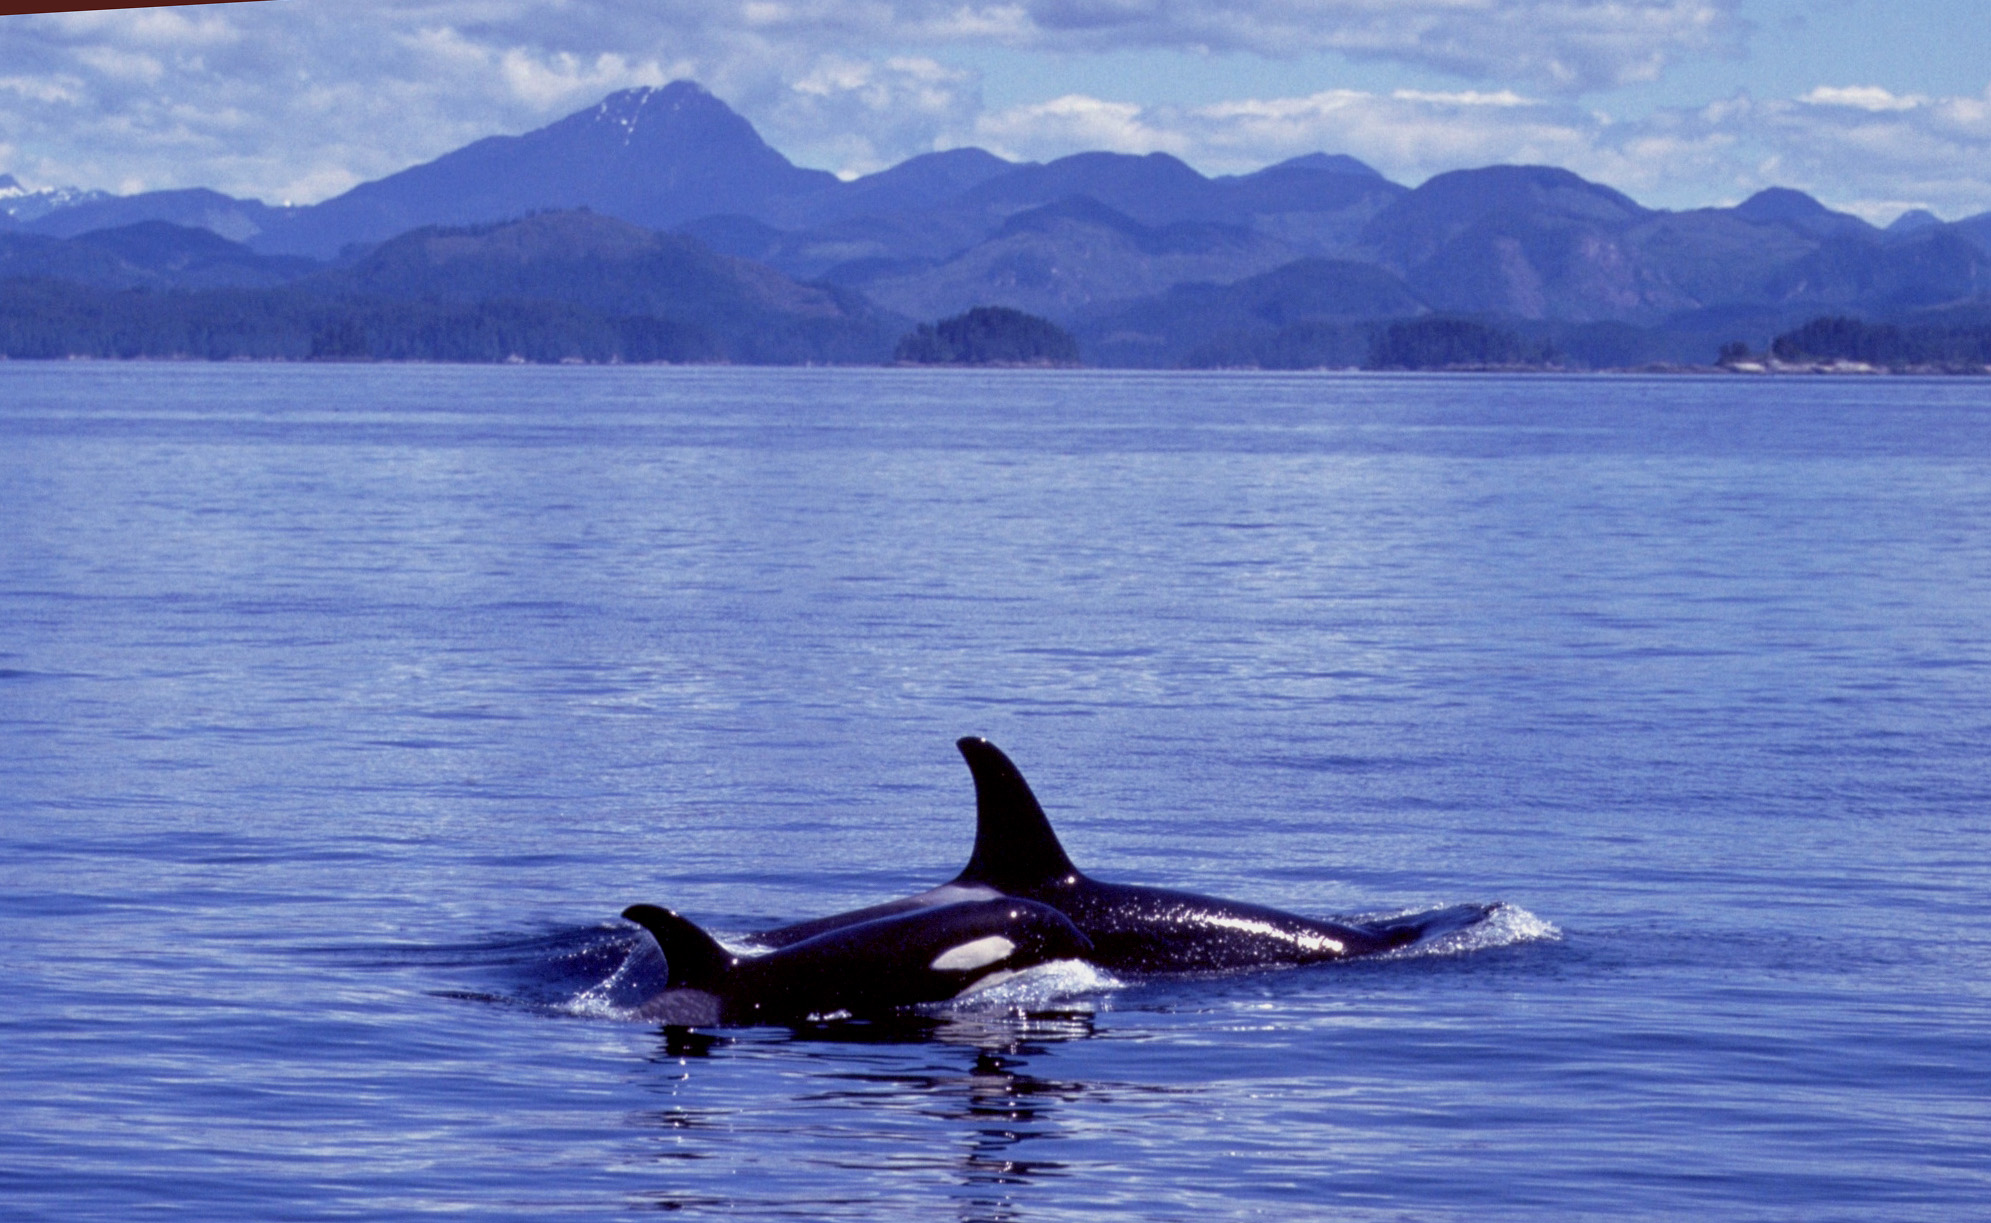 Ocean Pollution and Orcas